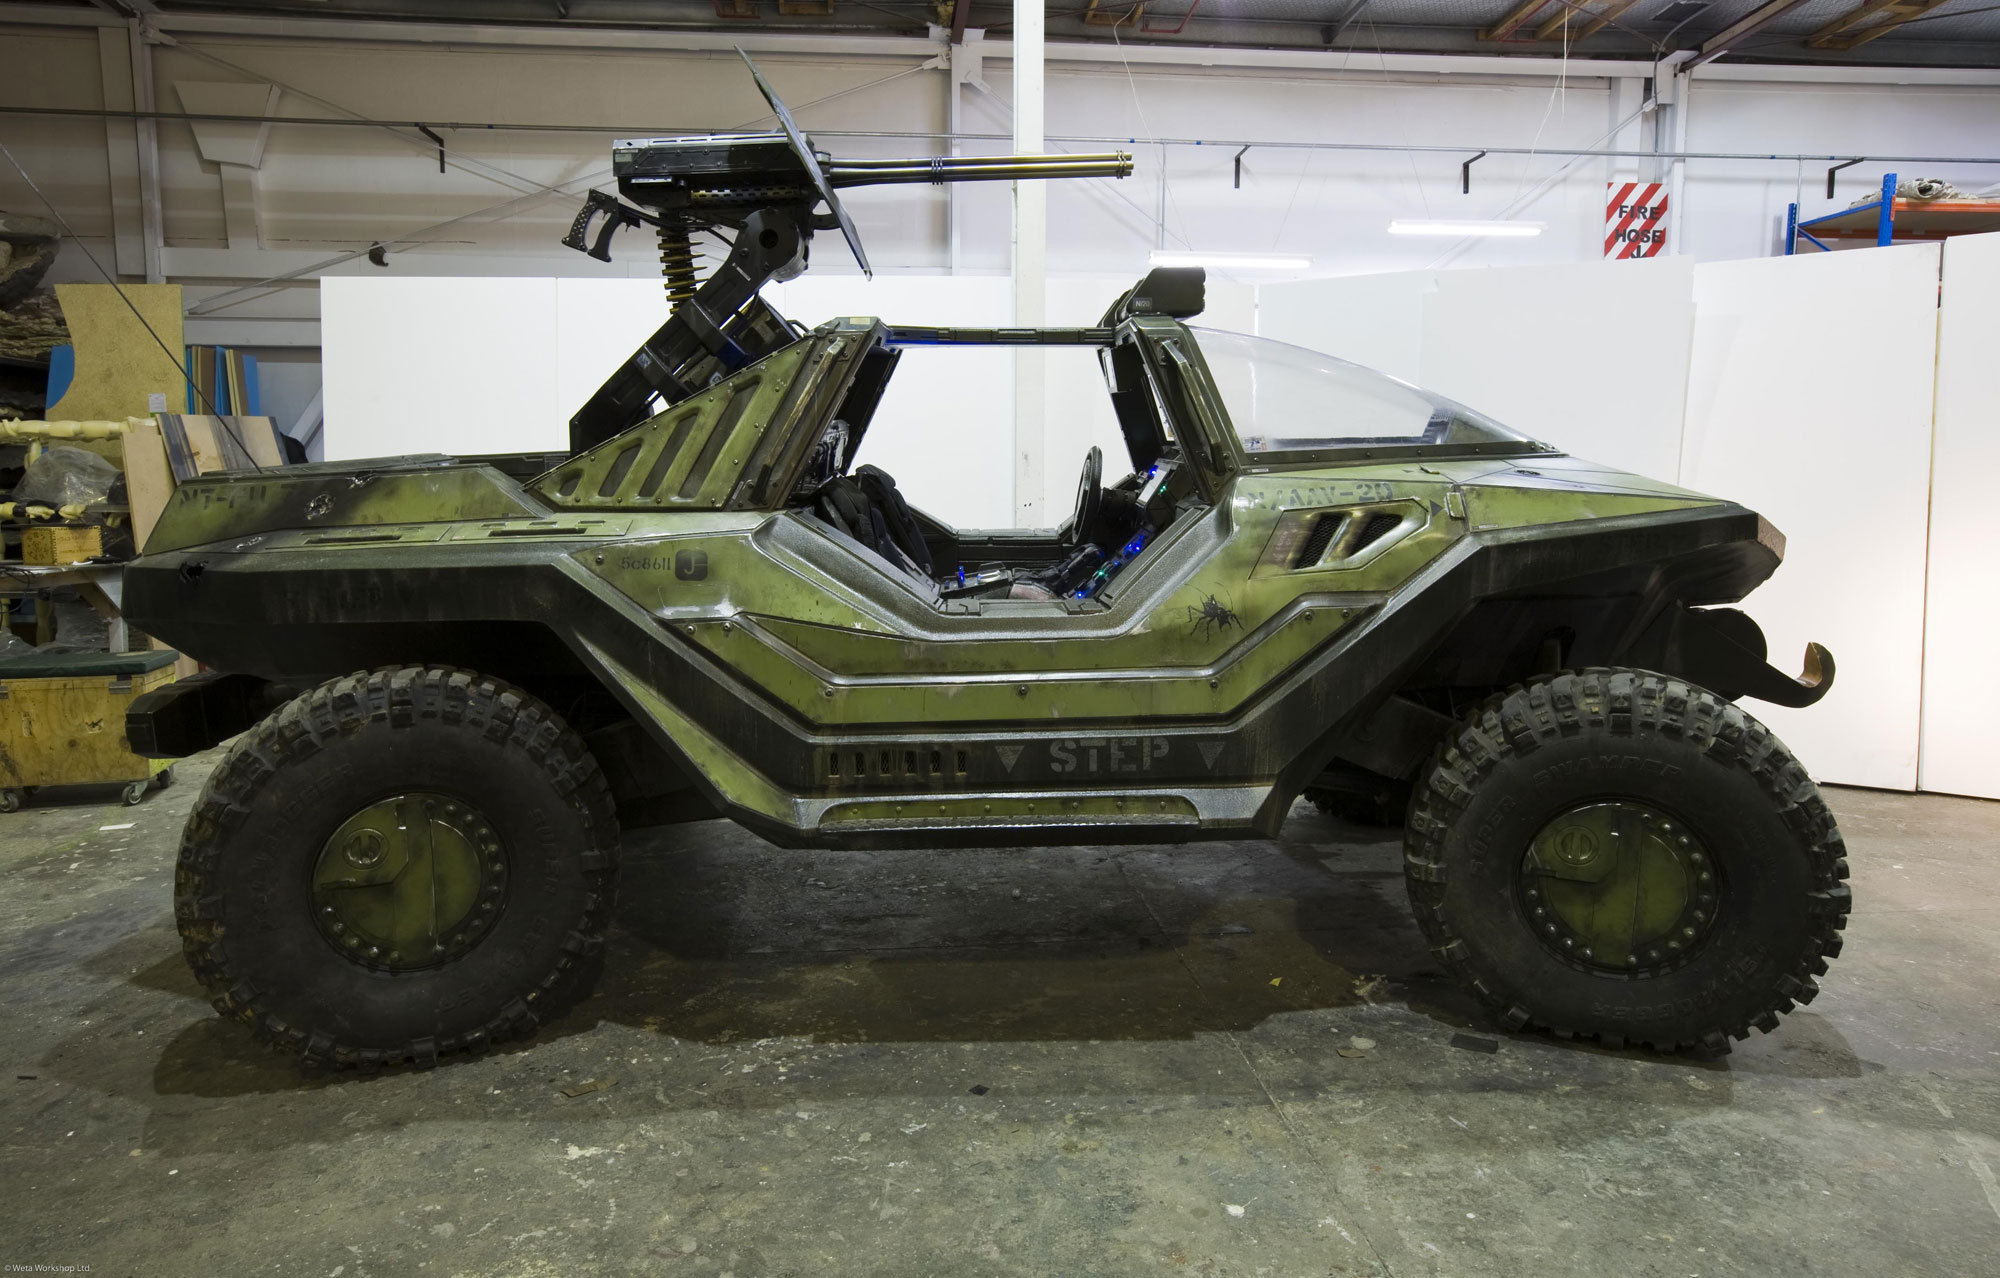 Jeep hurricane concept vehicle video #4